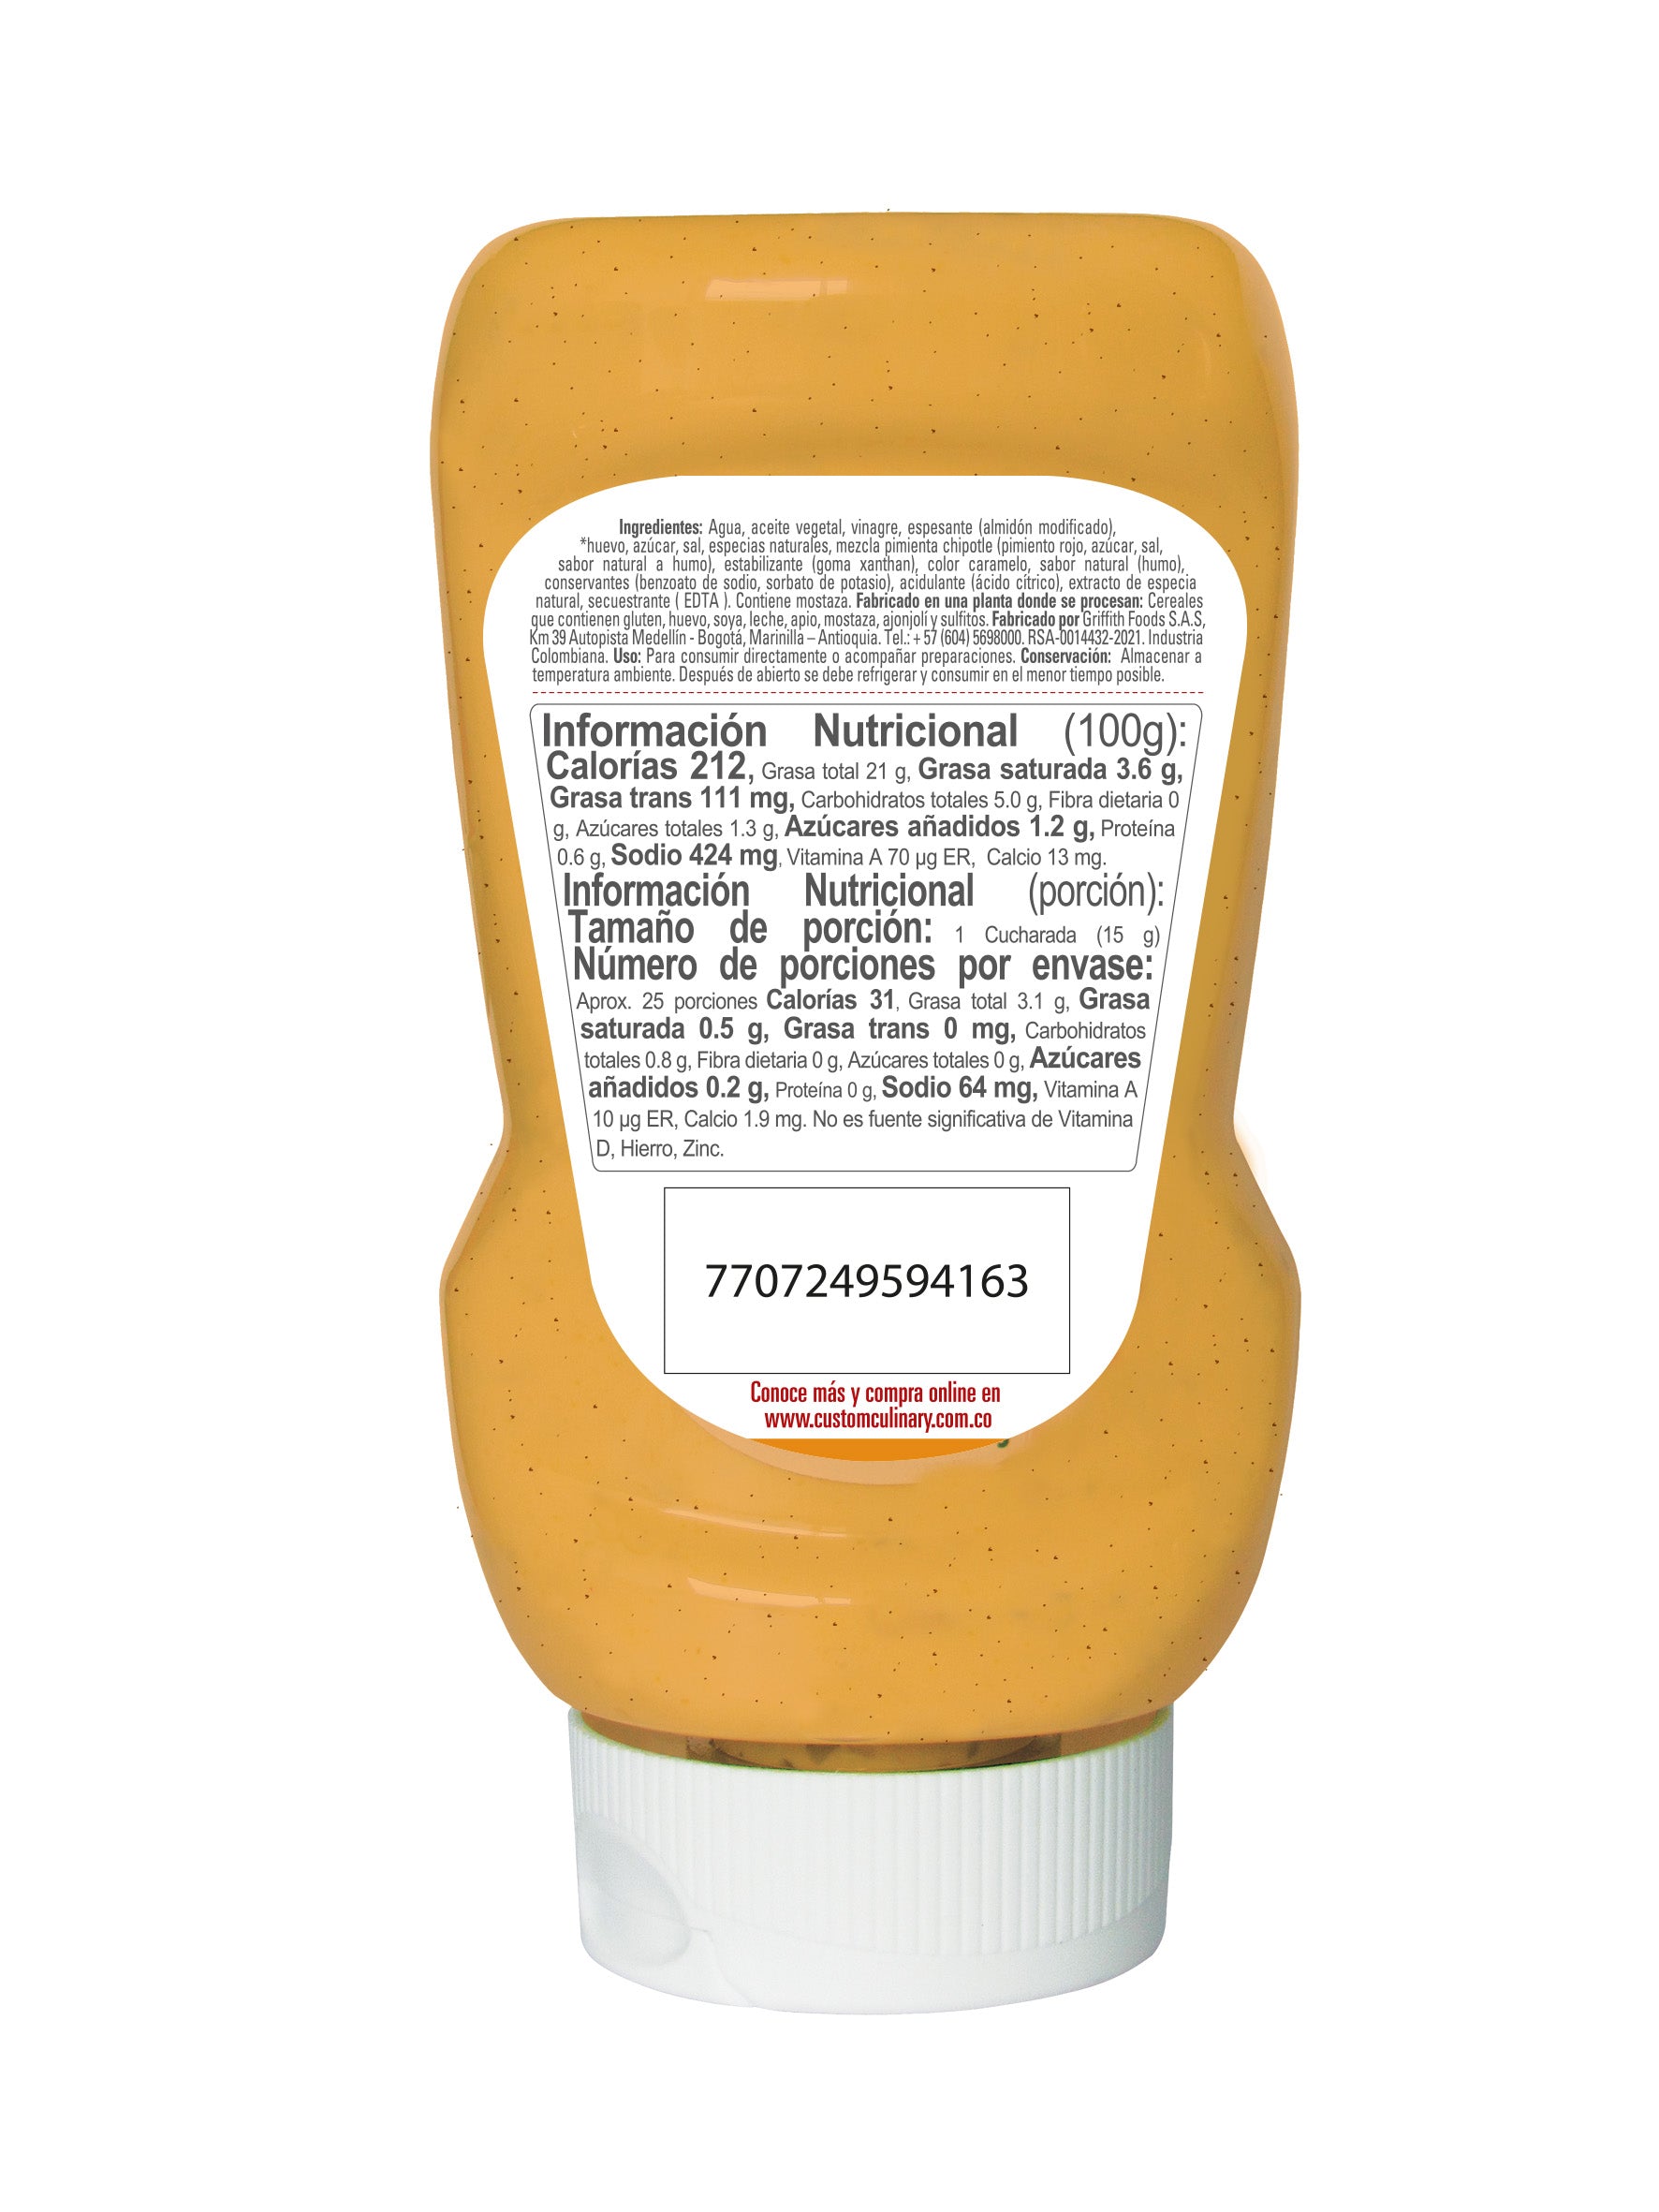 Salsa Chipotle Zafrán® Botella Pet 380g